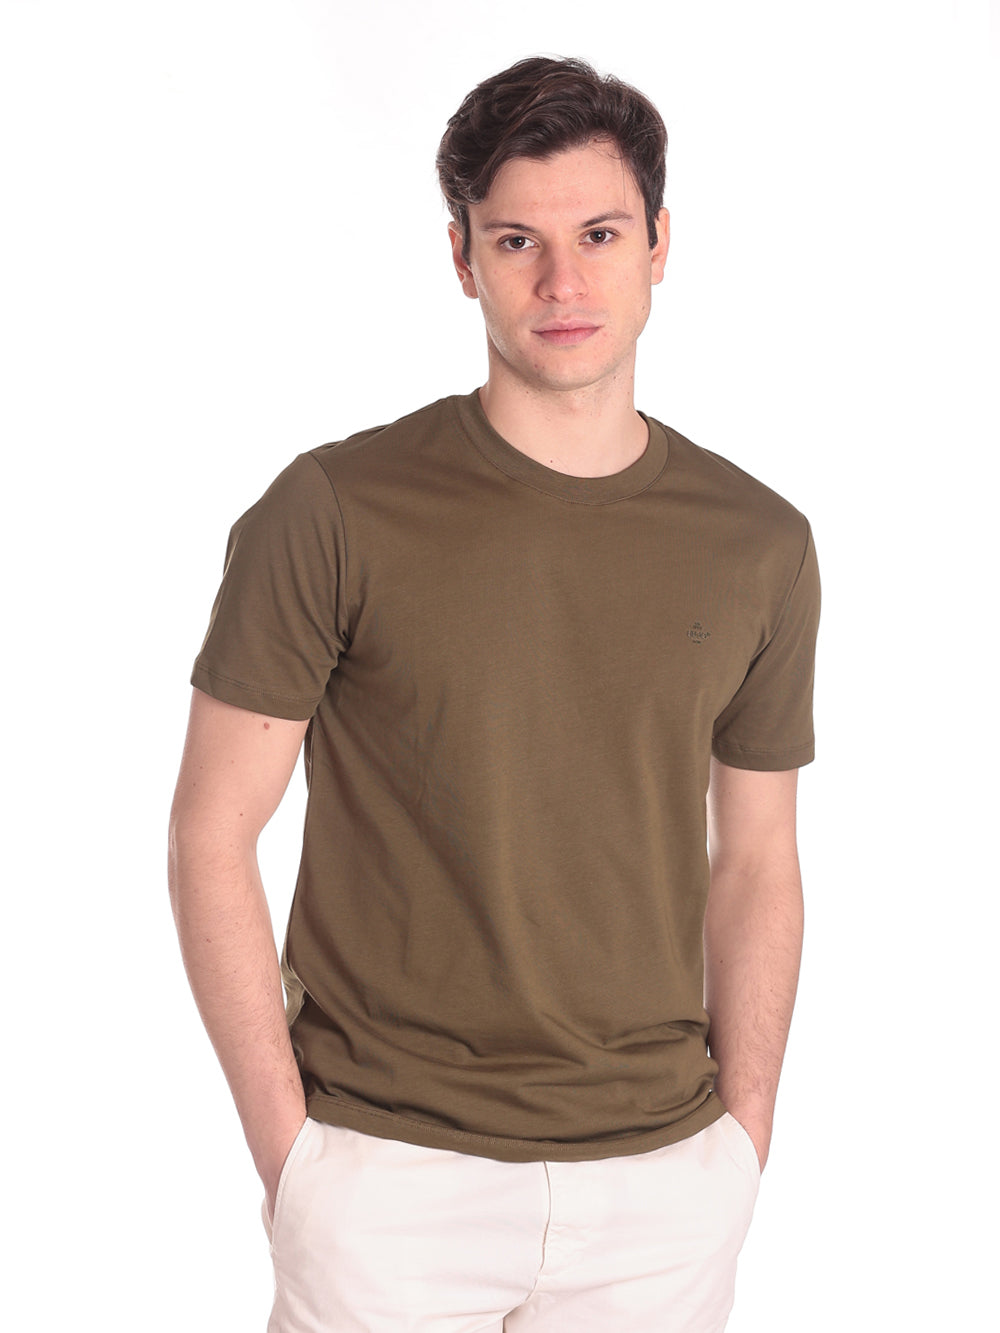 T-Shirt M123p204flamepocket Military Green